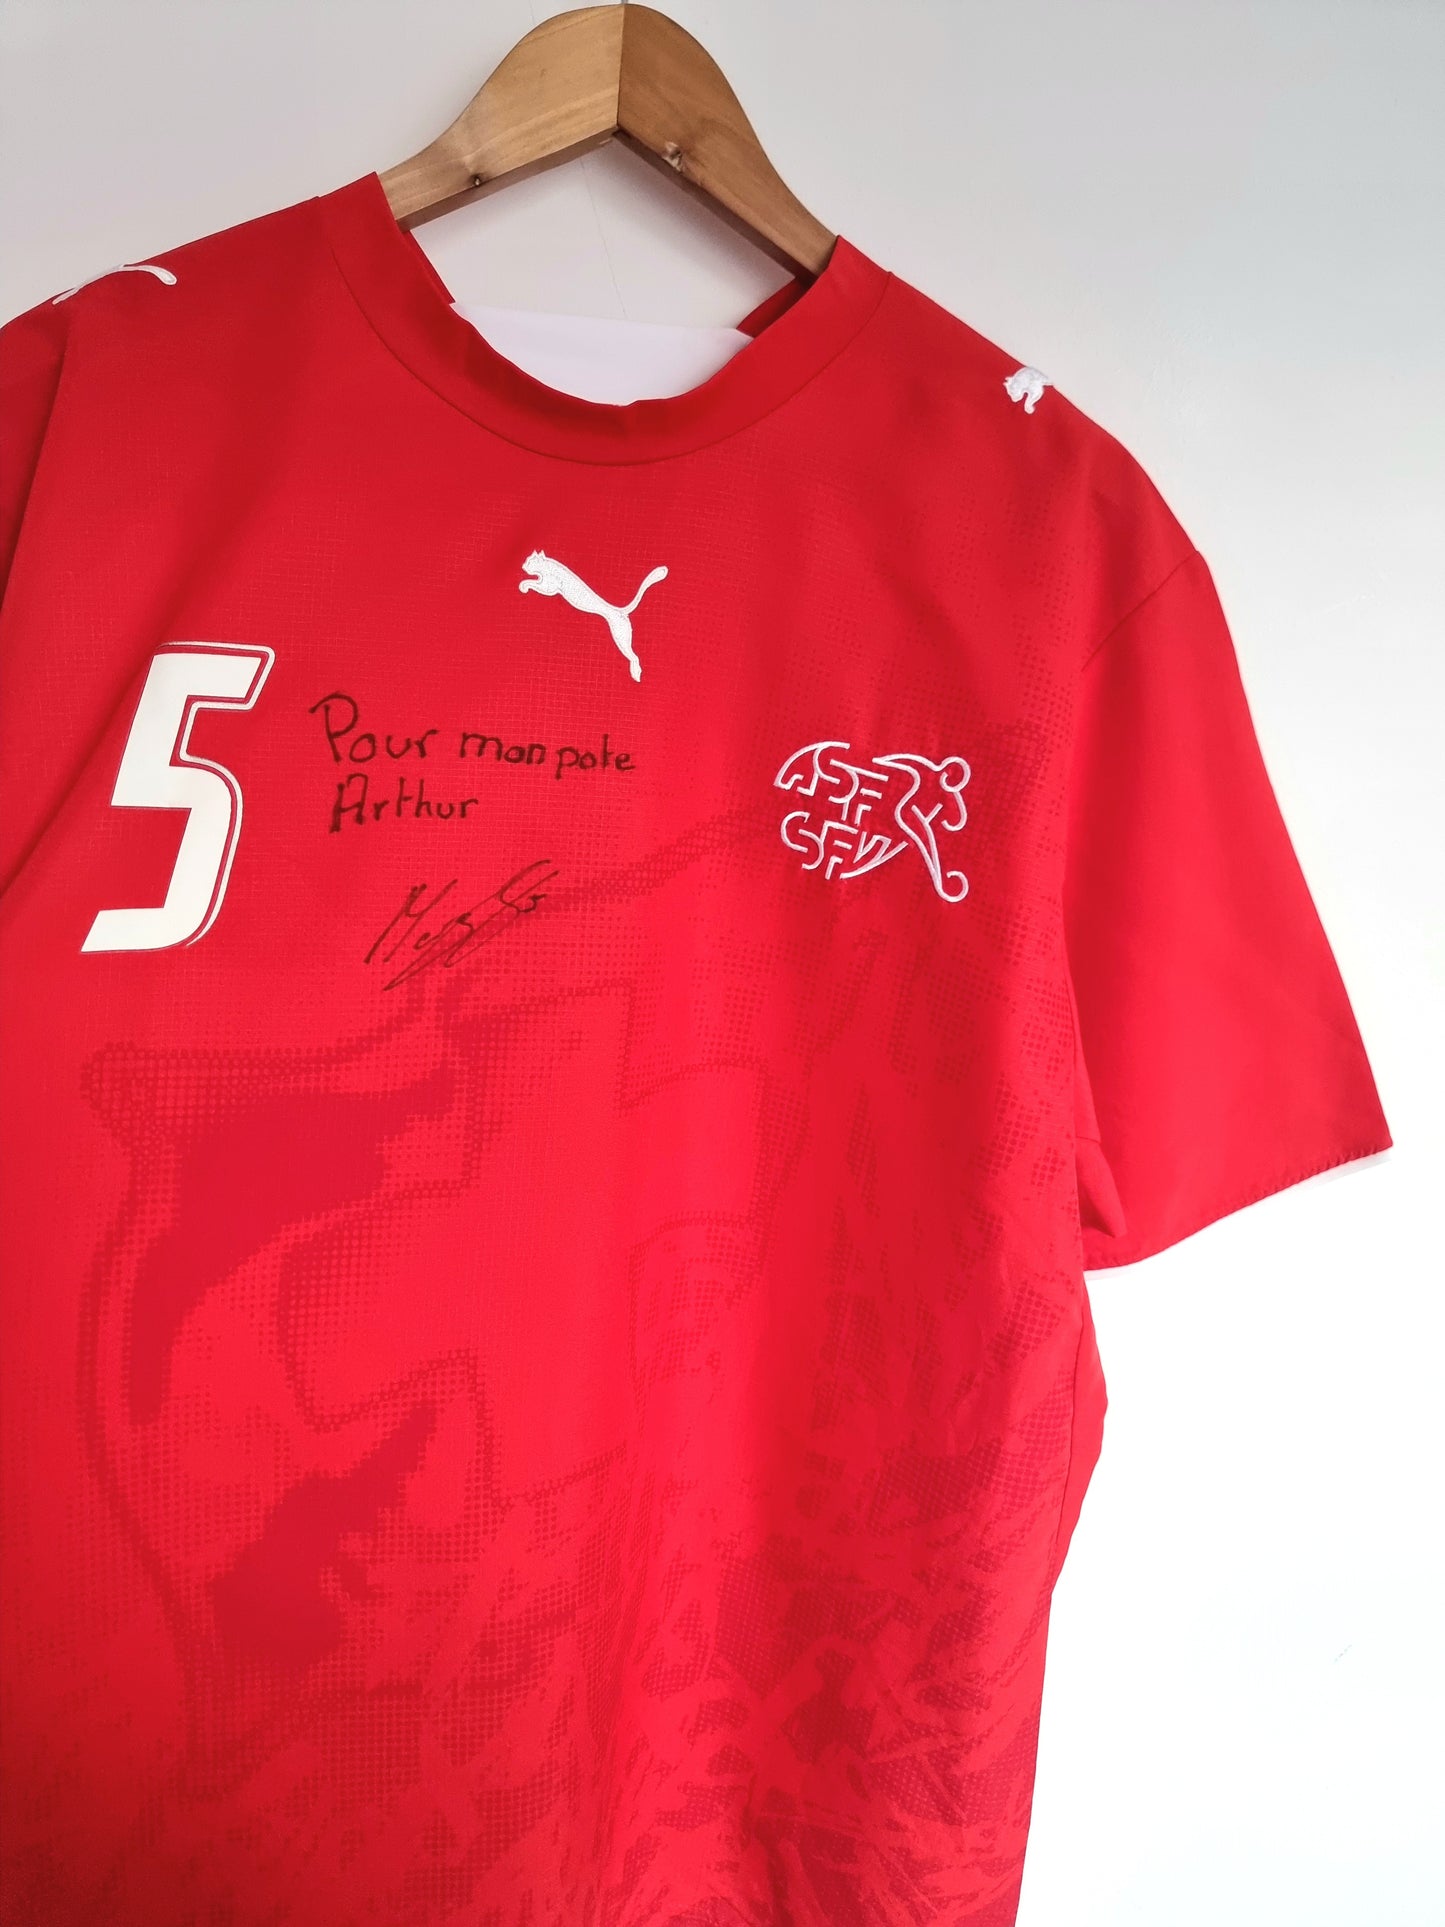 Puma Switzerland 06/08 'Margairaz 5' Signed Home Shirt XXL